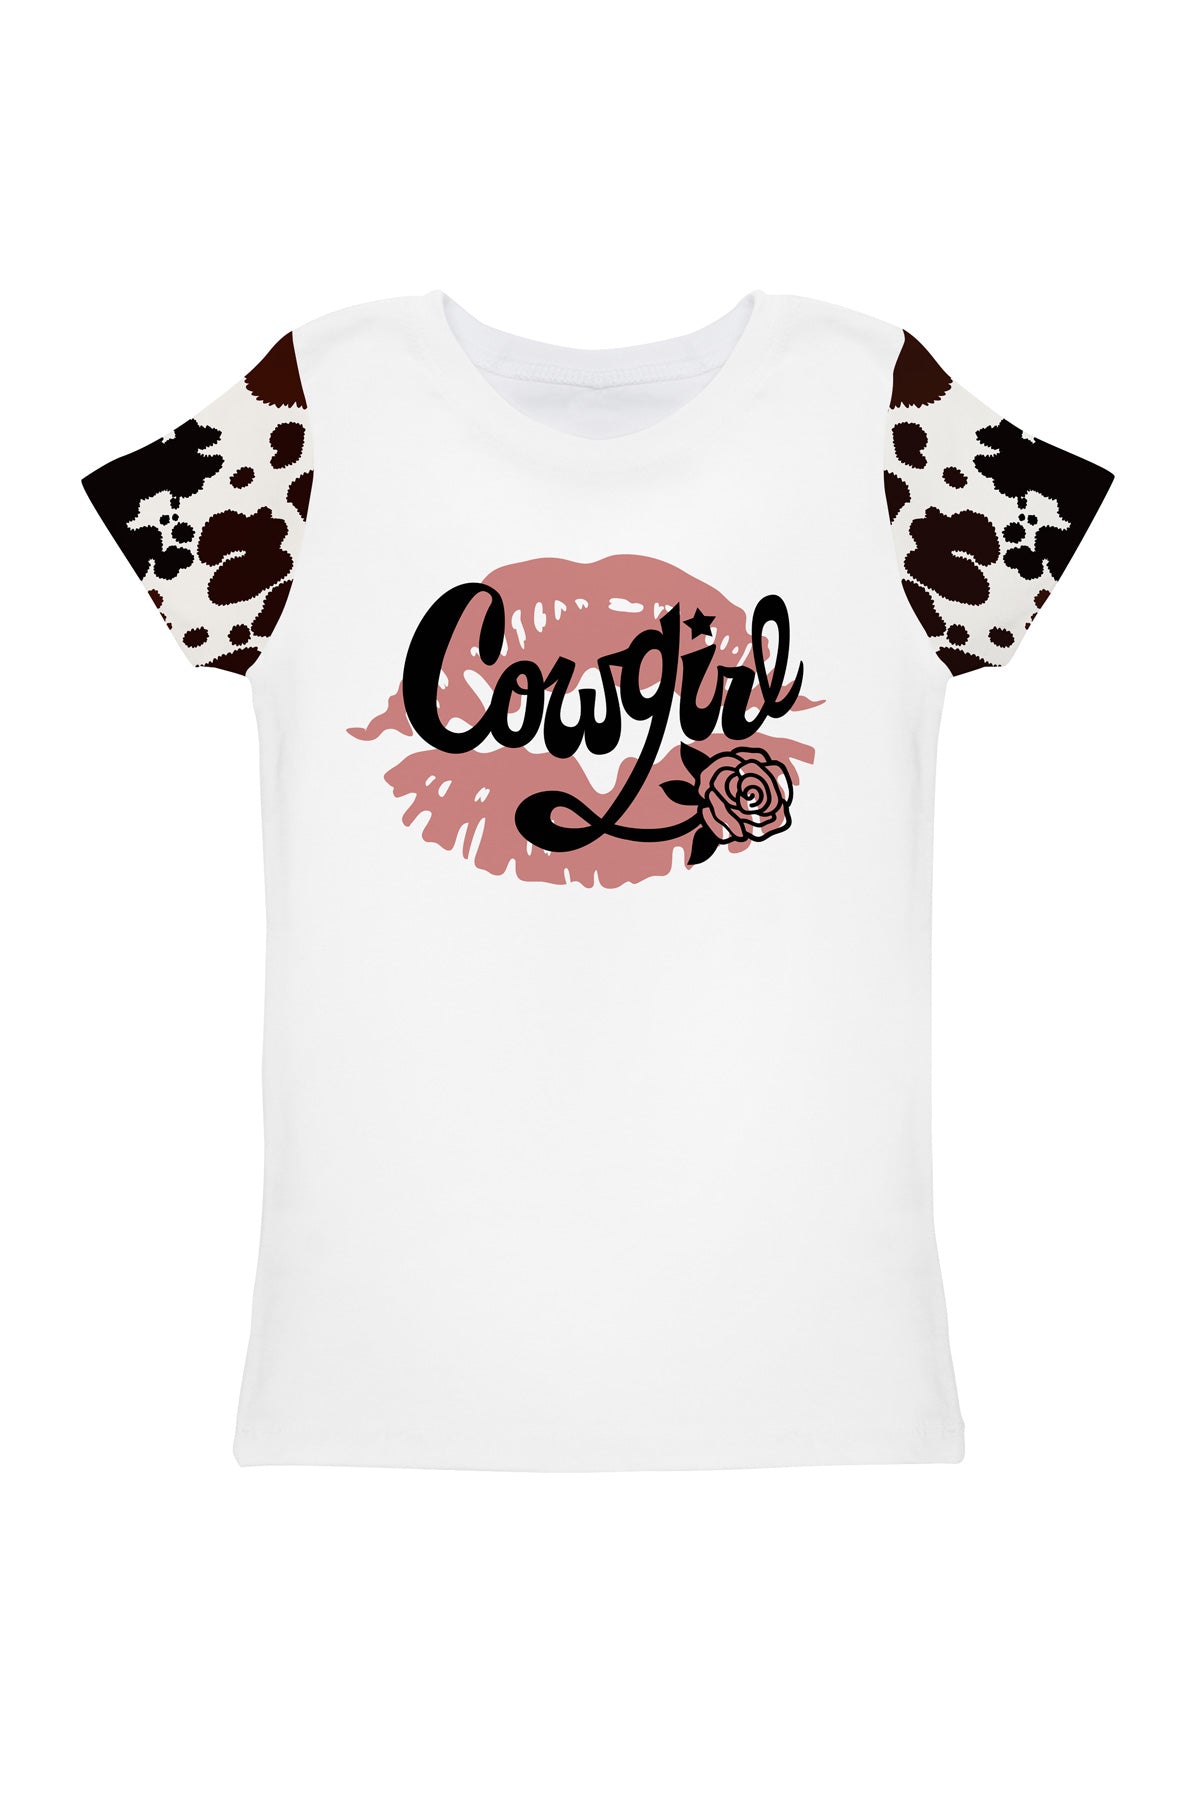 Cowgirl Zoe White Brown Cow Print Summer Cute Designer T-Shirt - Girls - Pineapple Clothing